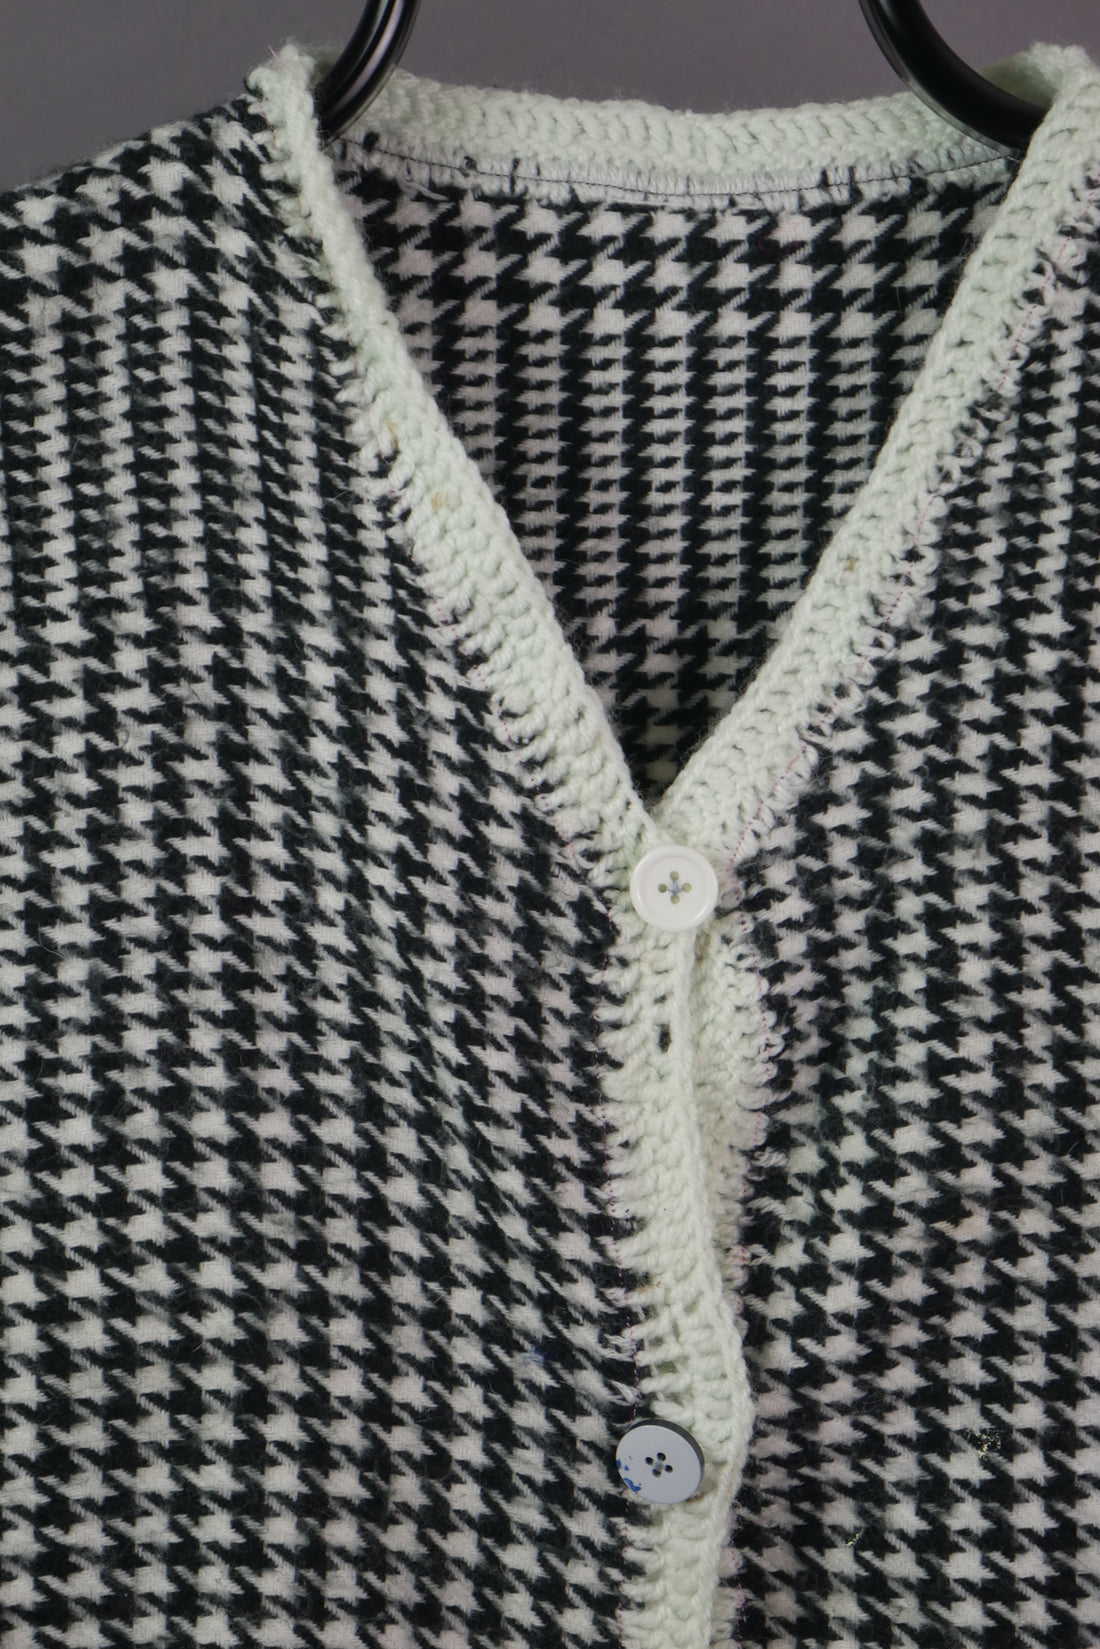 The Handmade Houndstooth Knit Vest (Women's S)